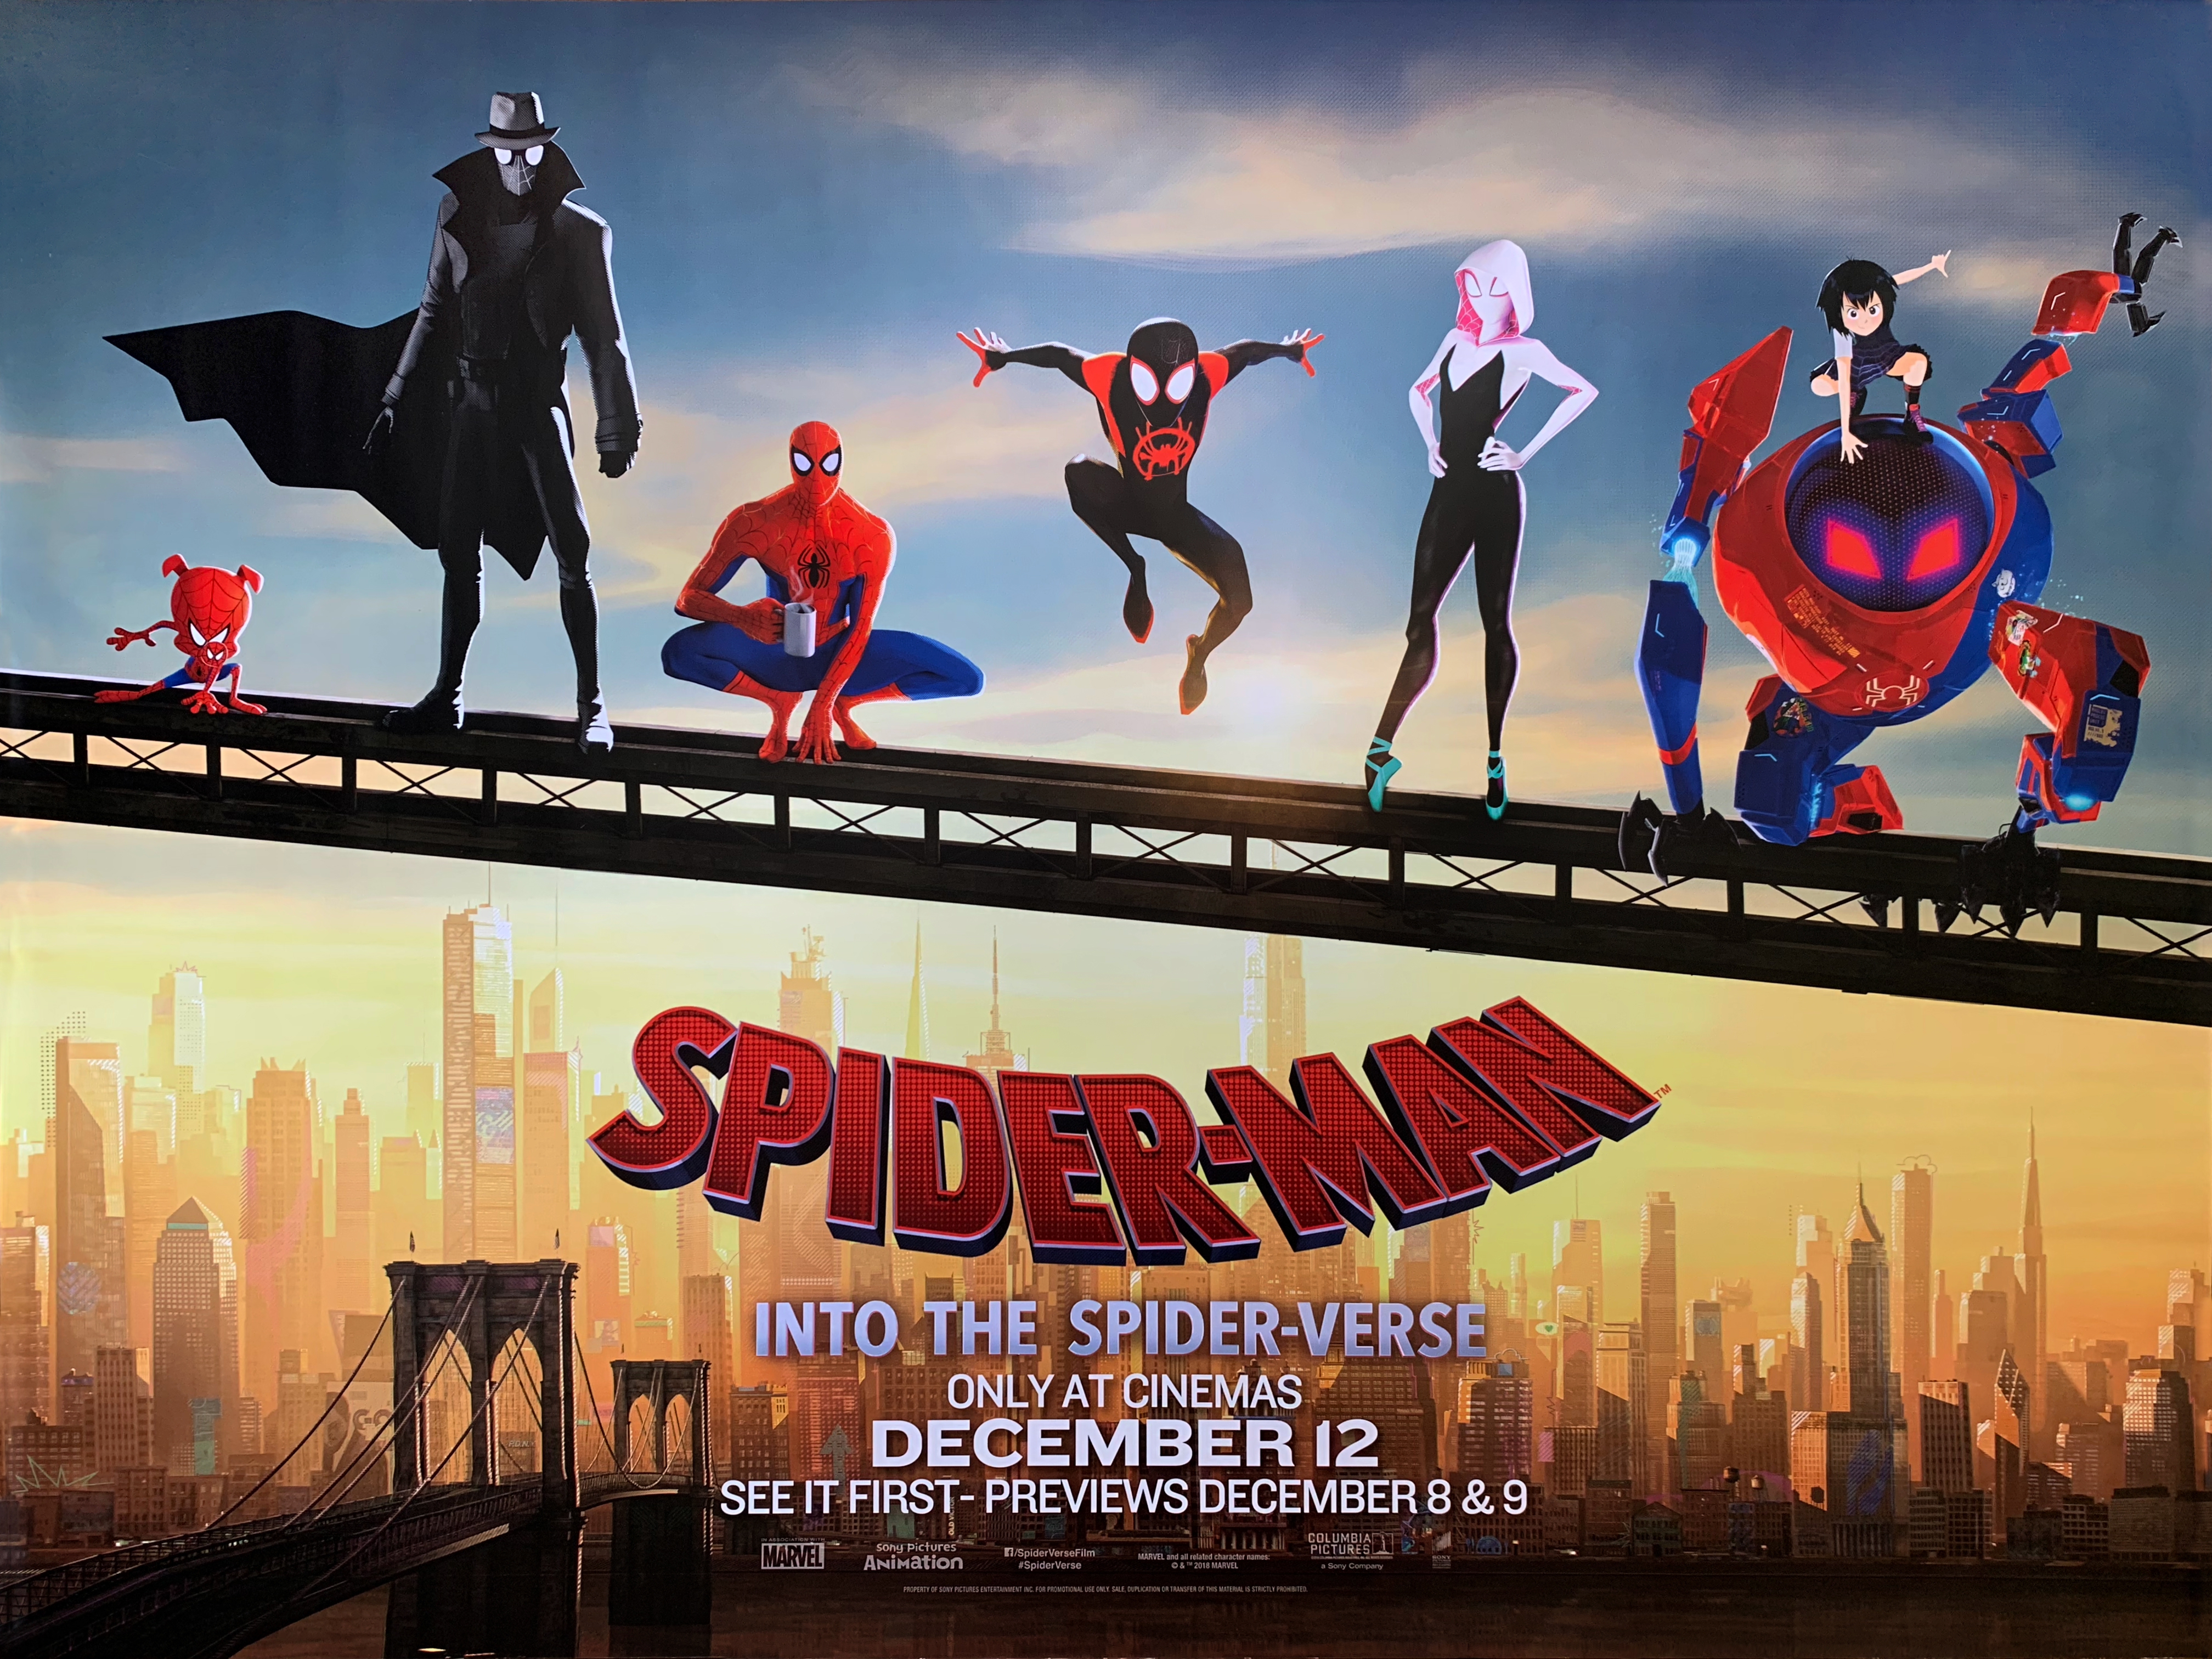 Spider-man: Into The Spider-verse advance movie quad poster